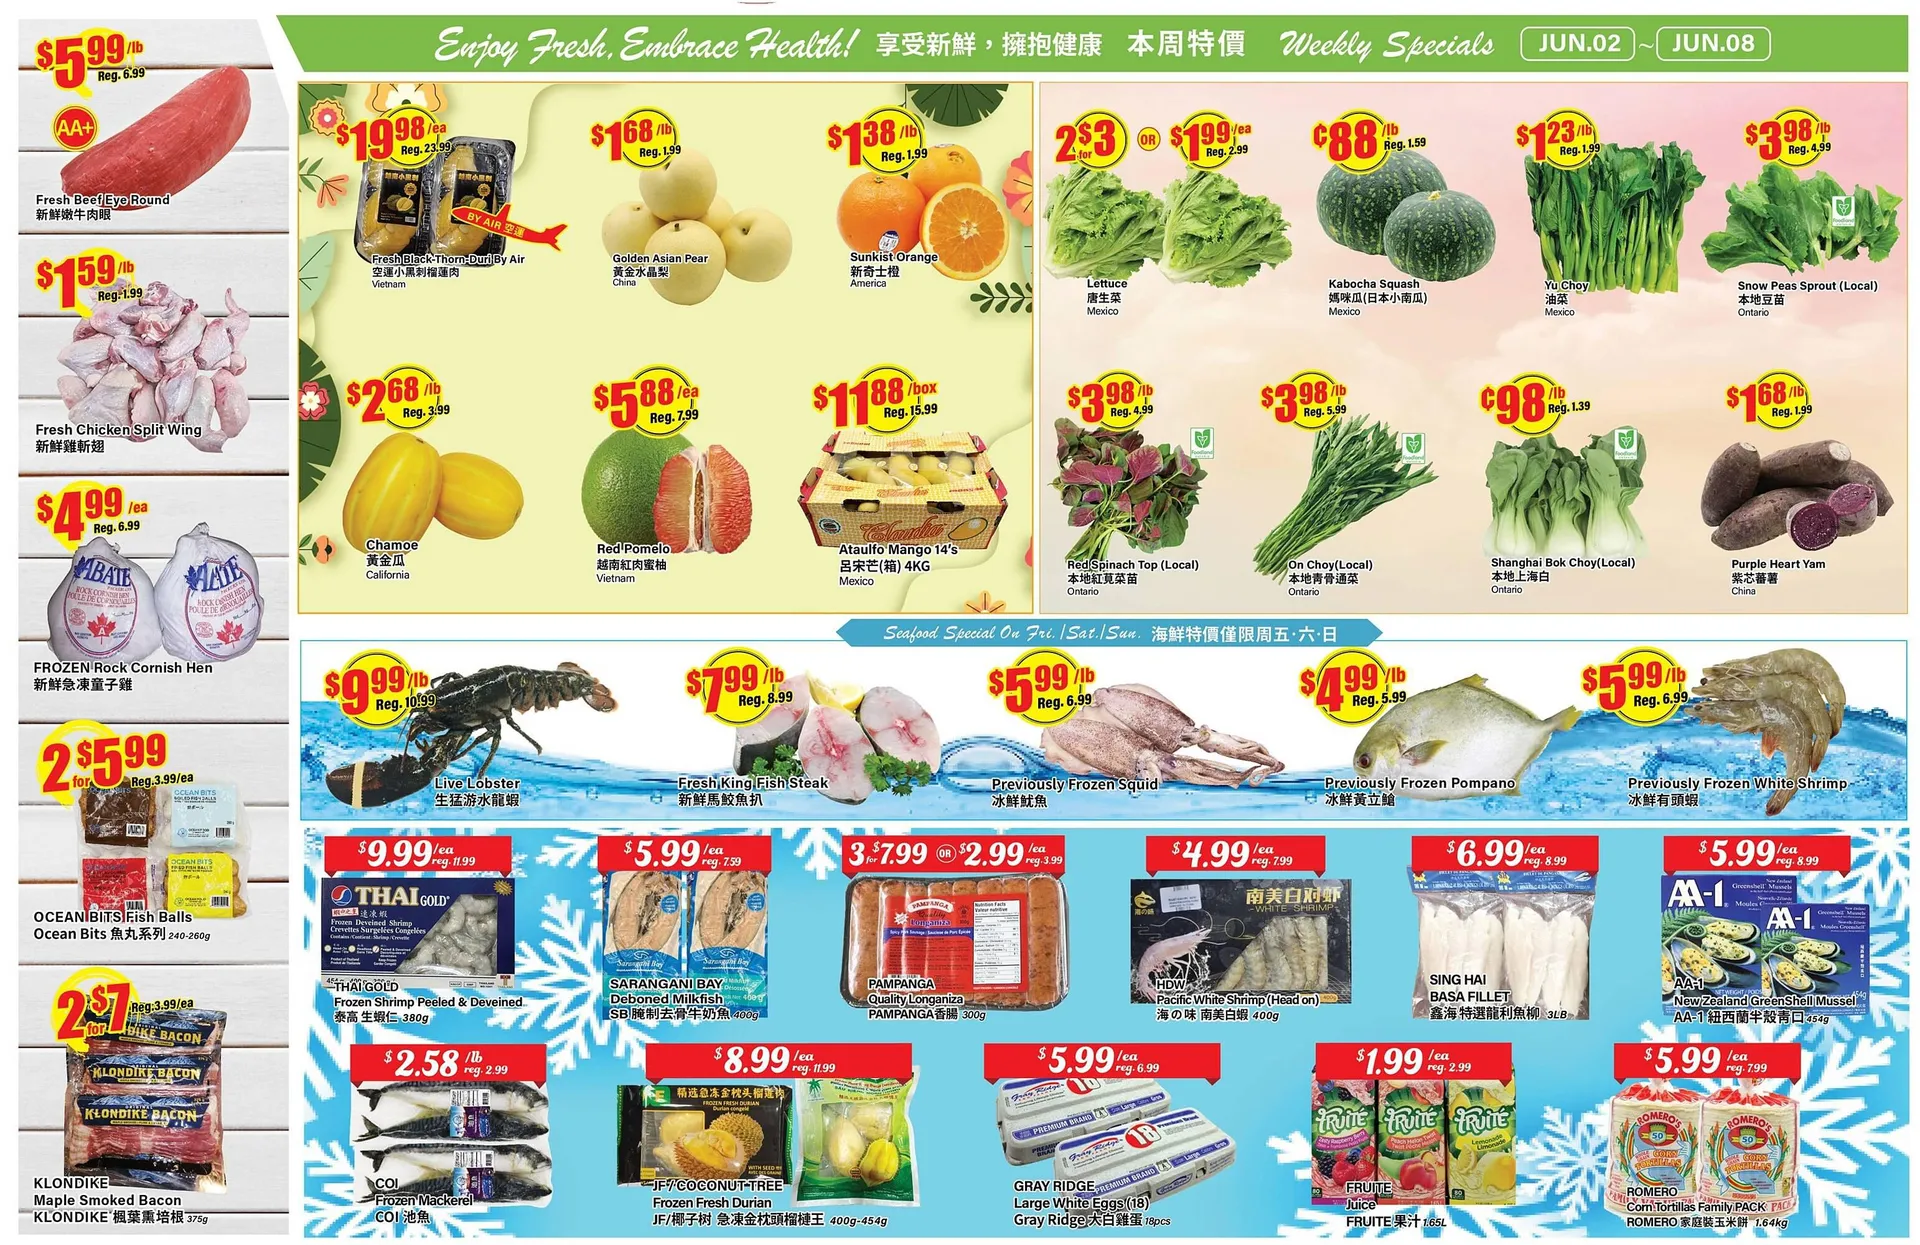 Btrust Supermarket flyer - 3